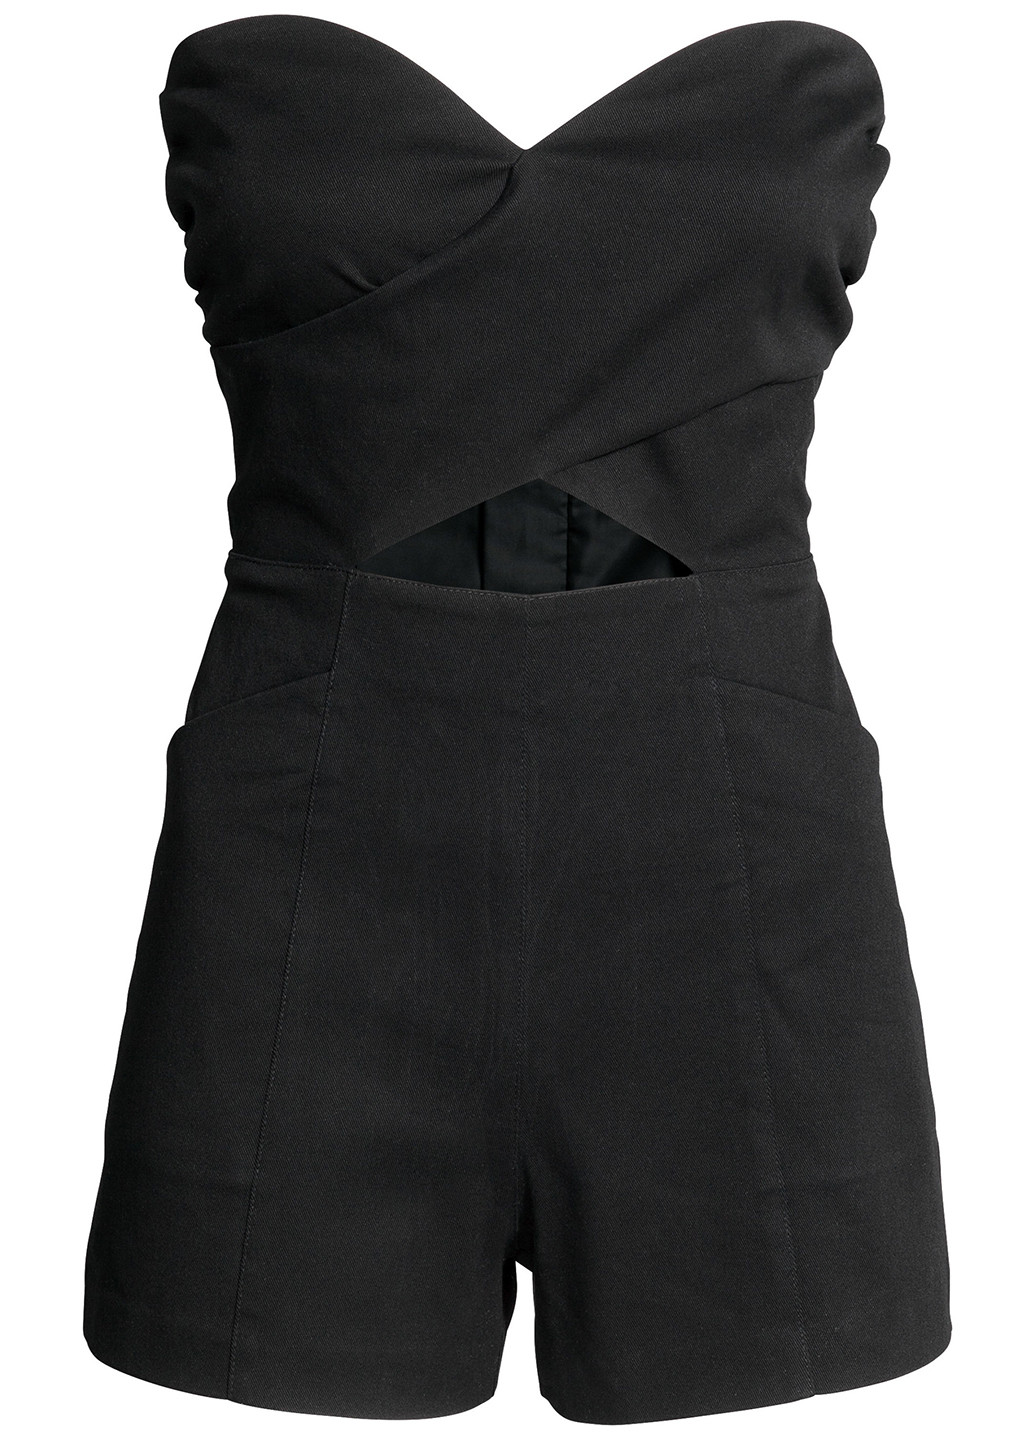 Комбинезон H&M комбинезон-шорты однотонный чёрный кэжуал